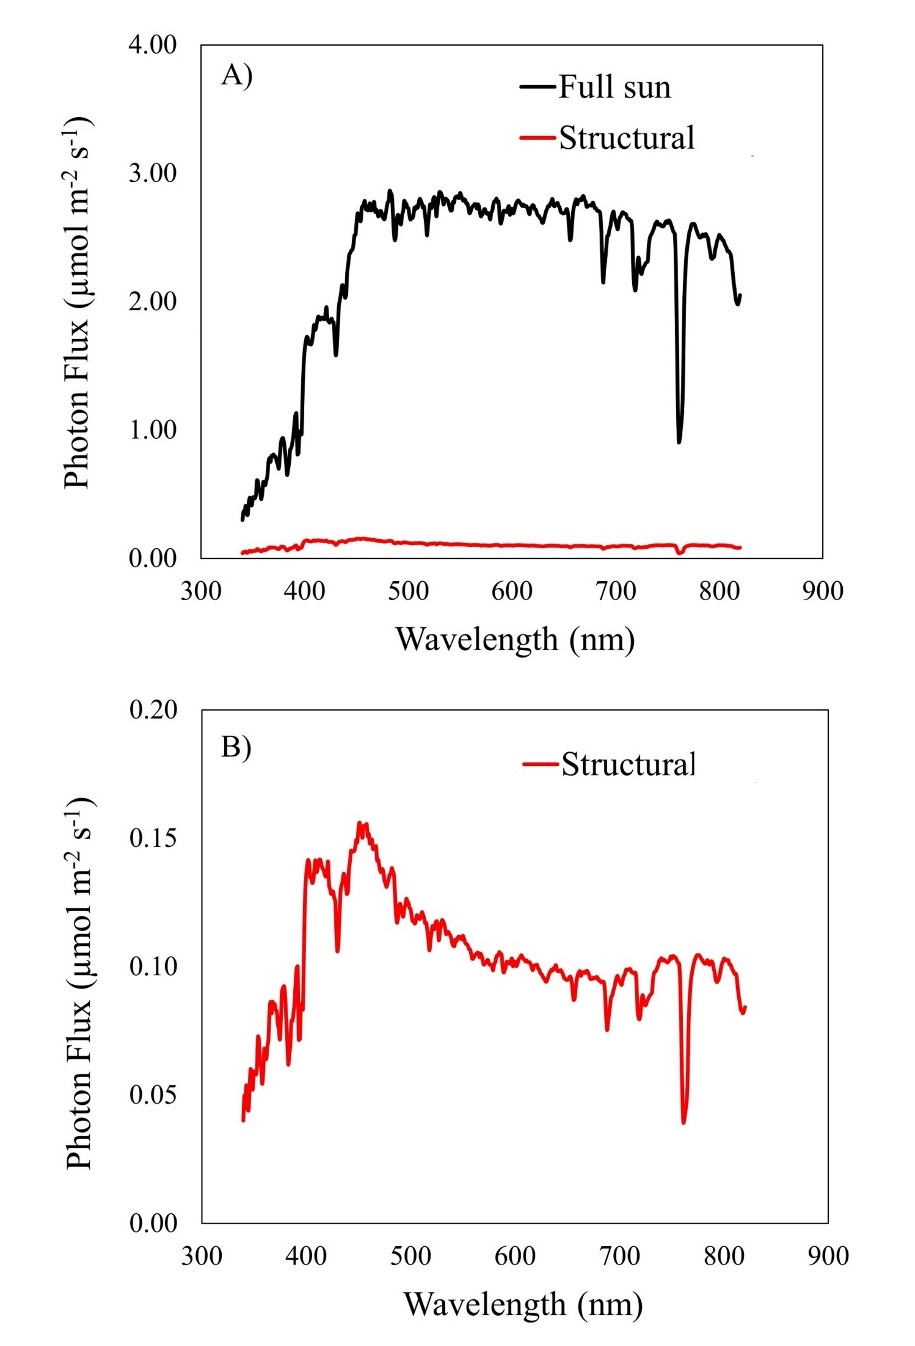 two graphs of wavelength vs photon flux